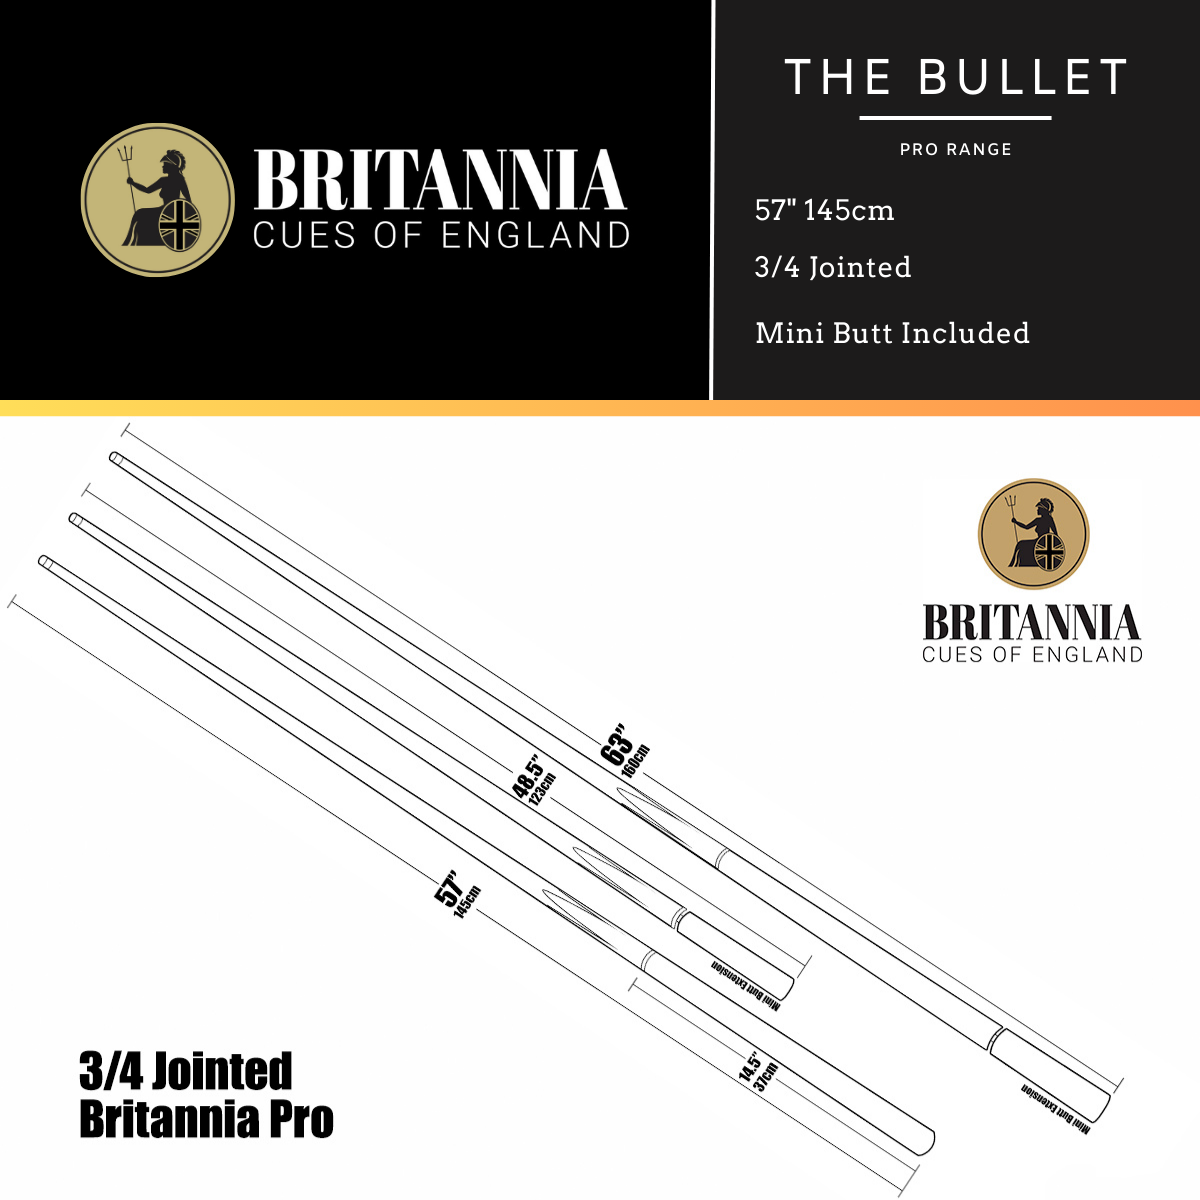 Britannia 3/4 Jointed Python Pro Range British Pool Cue